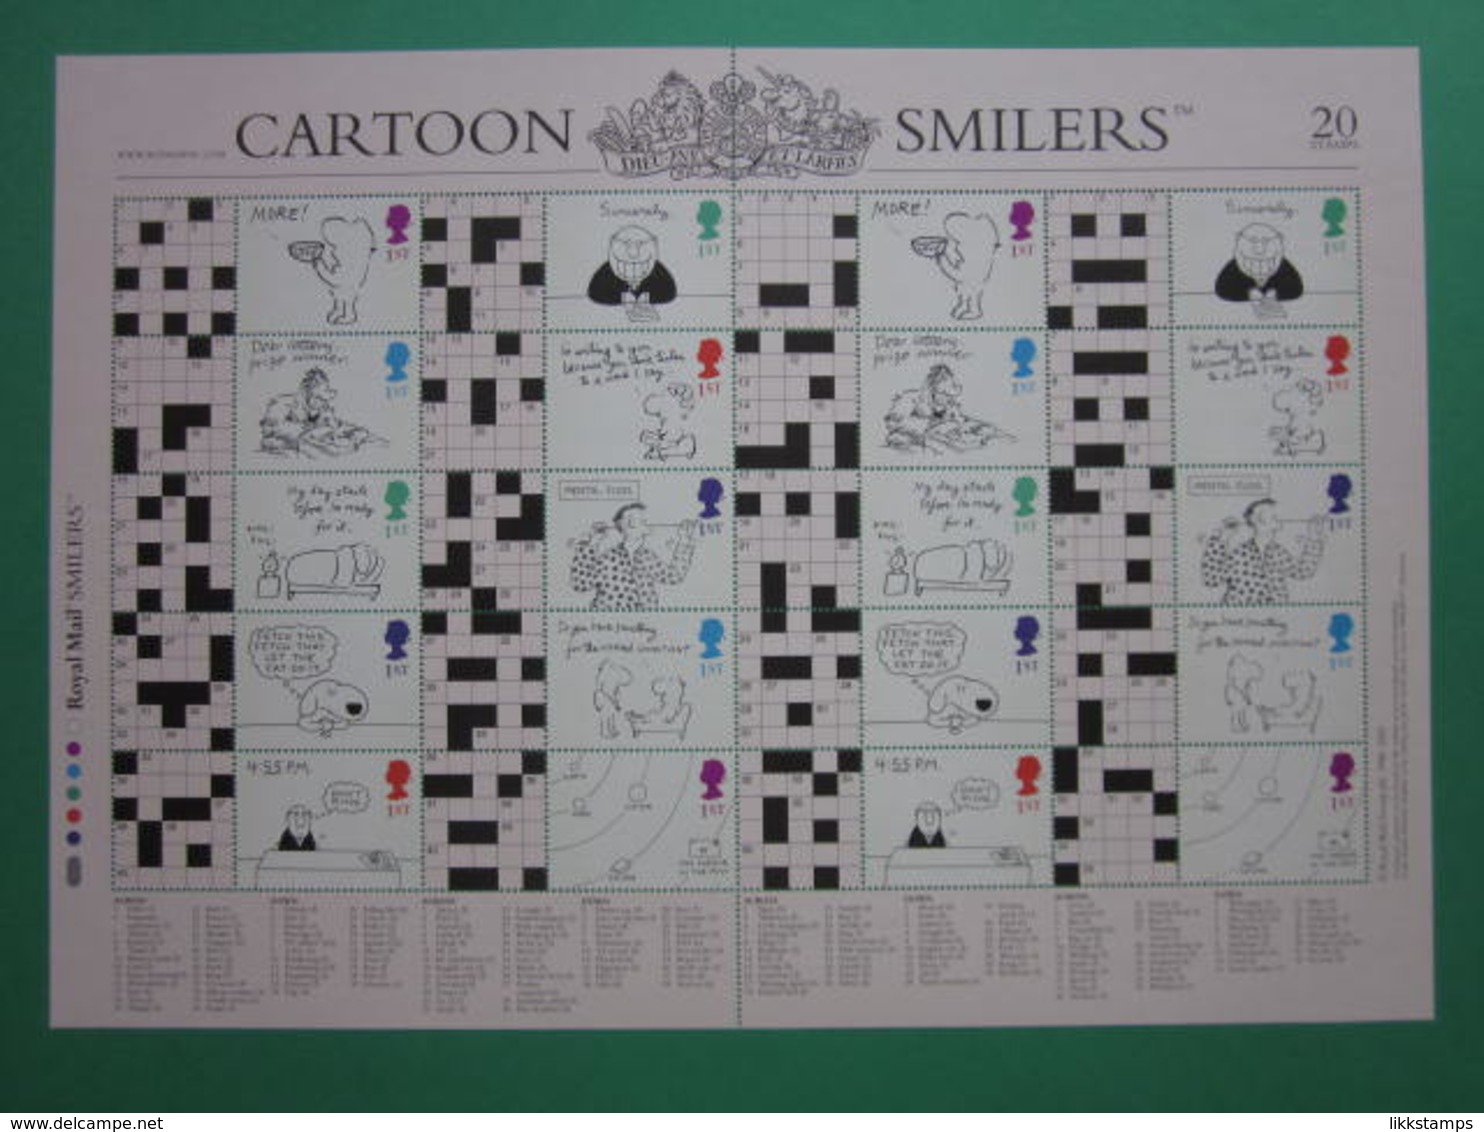 2003 ROYAL MAIL CROSSWORD CARTOONS GENERIC SMILERS SHEET. #SS0016 - Smilers Sheets